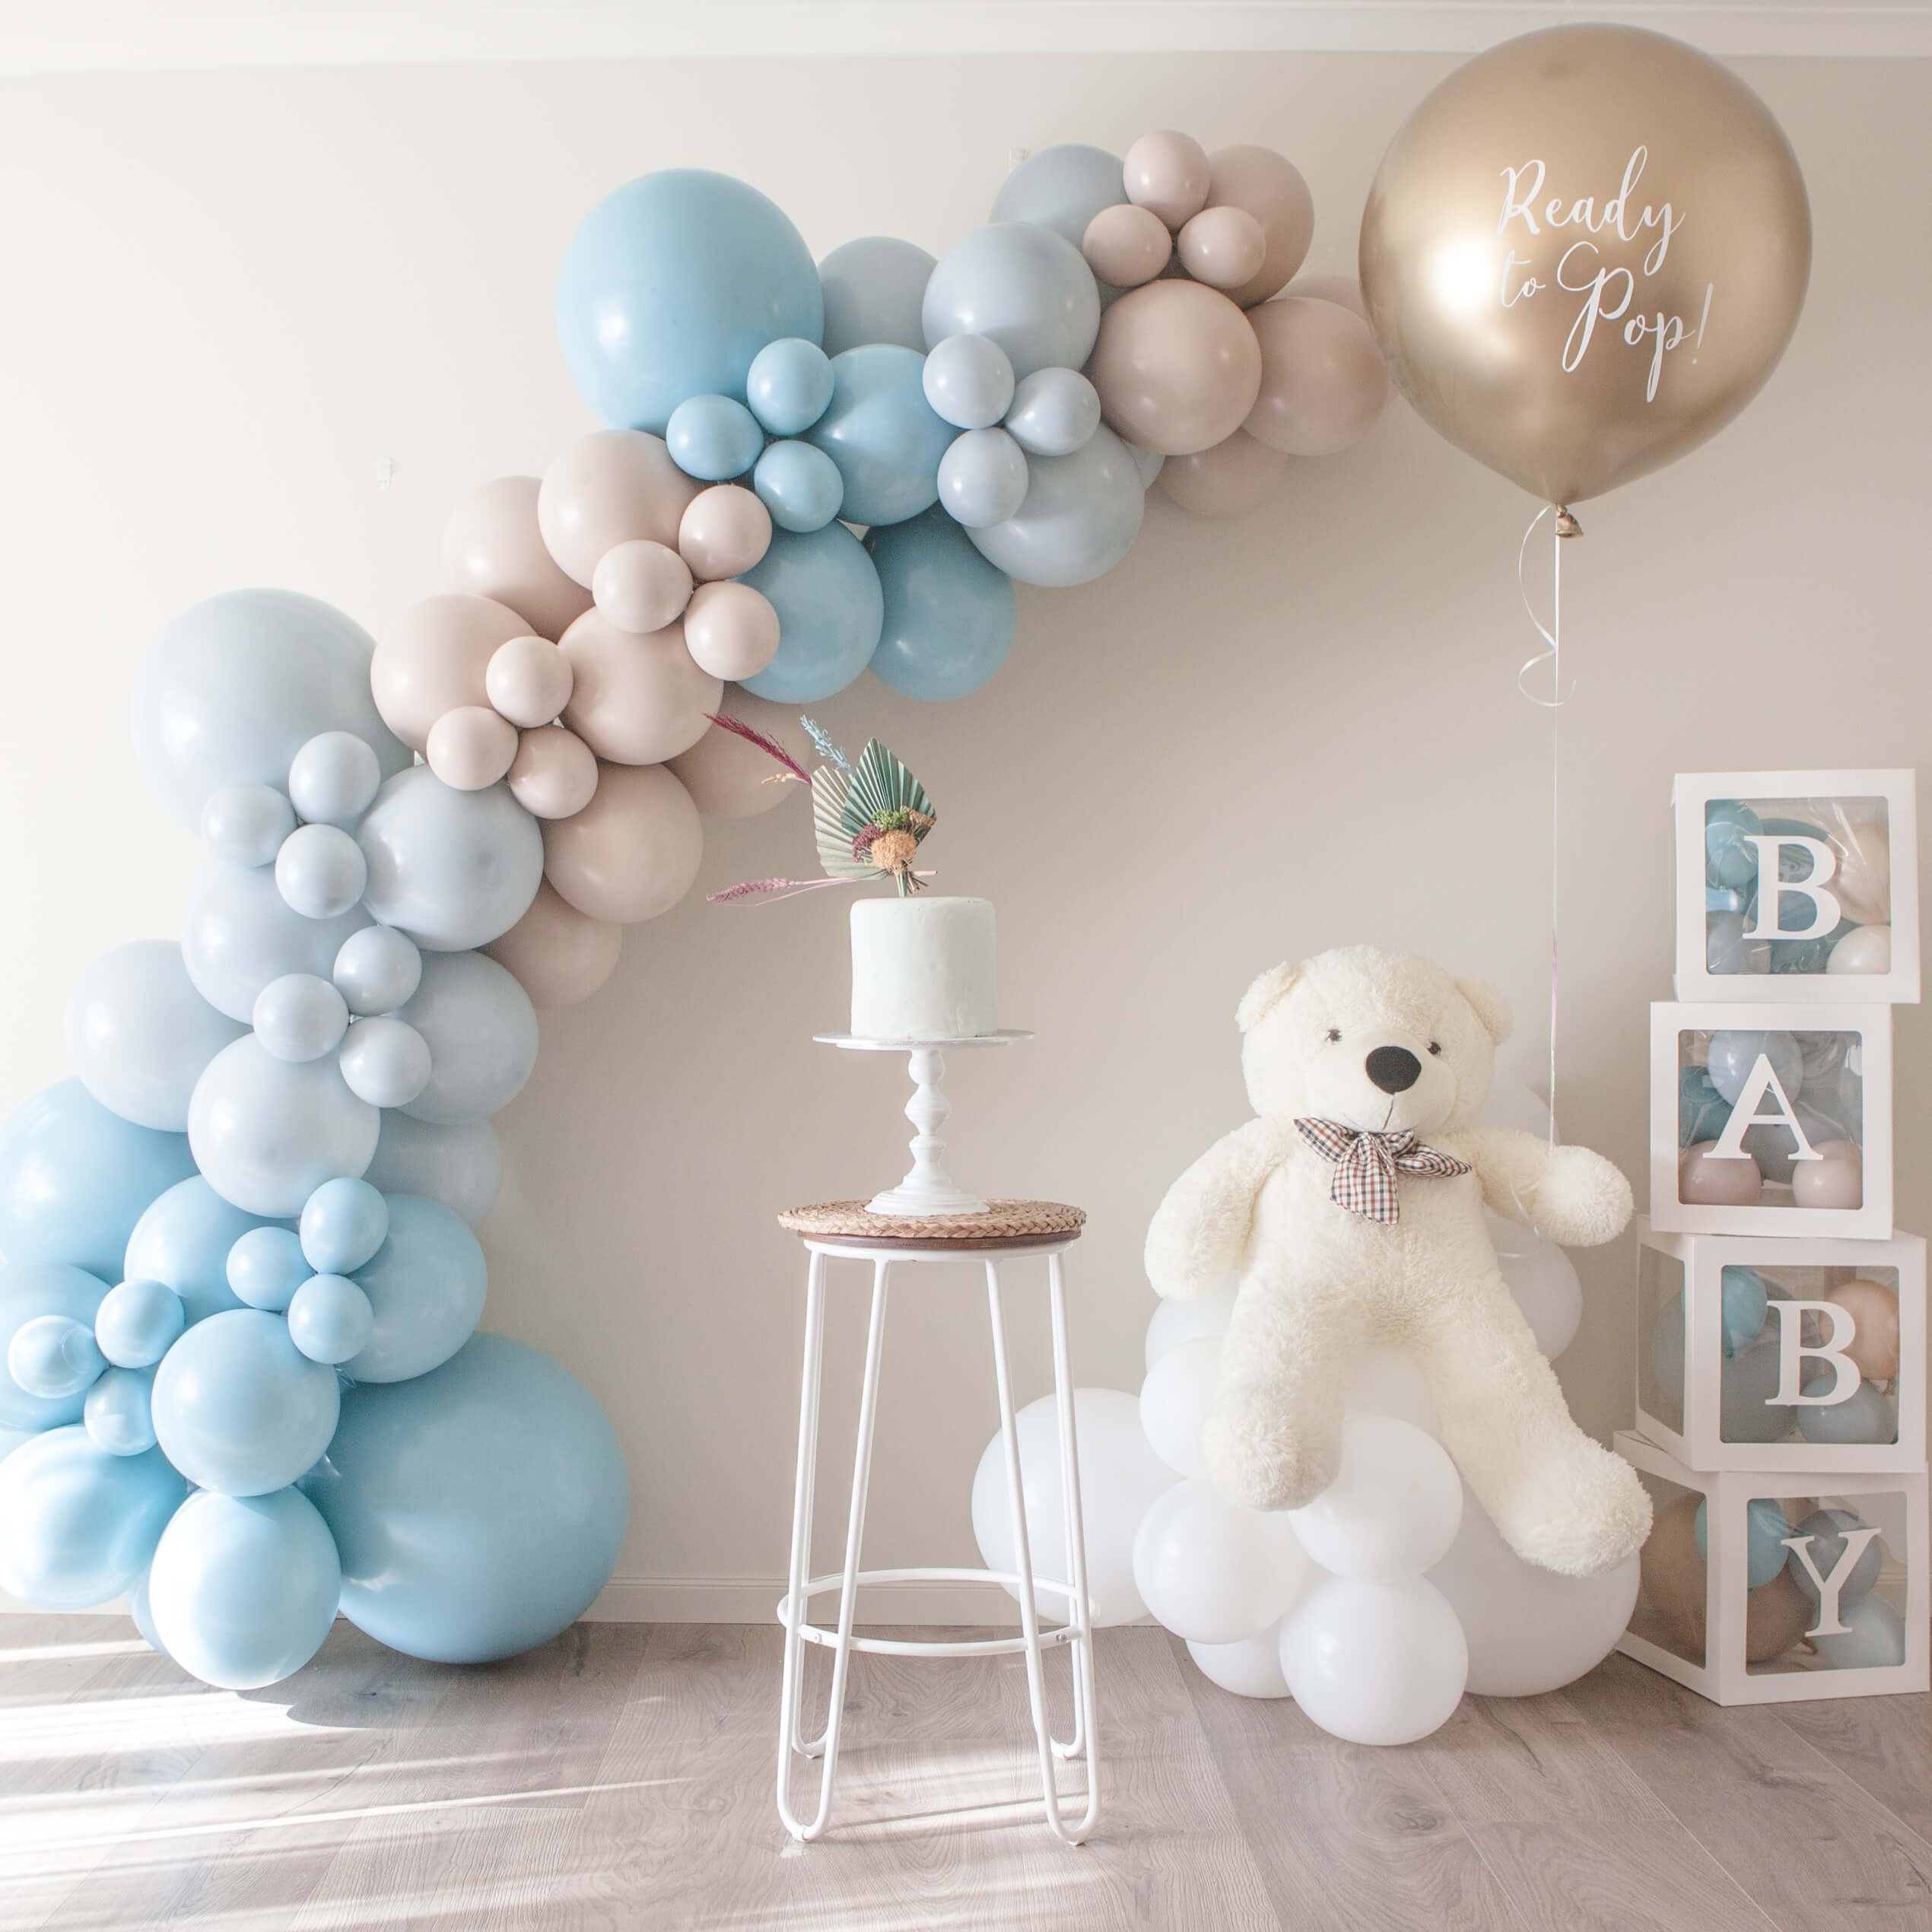 We Can't Bearly Wait Gender Reveal Balloon Garland DIY Kit - Seaglass & Fog